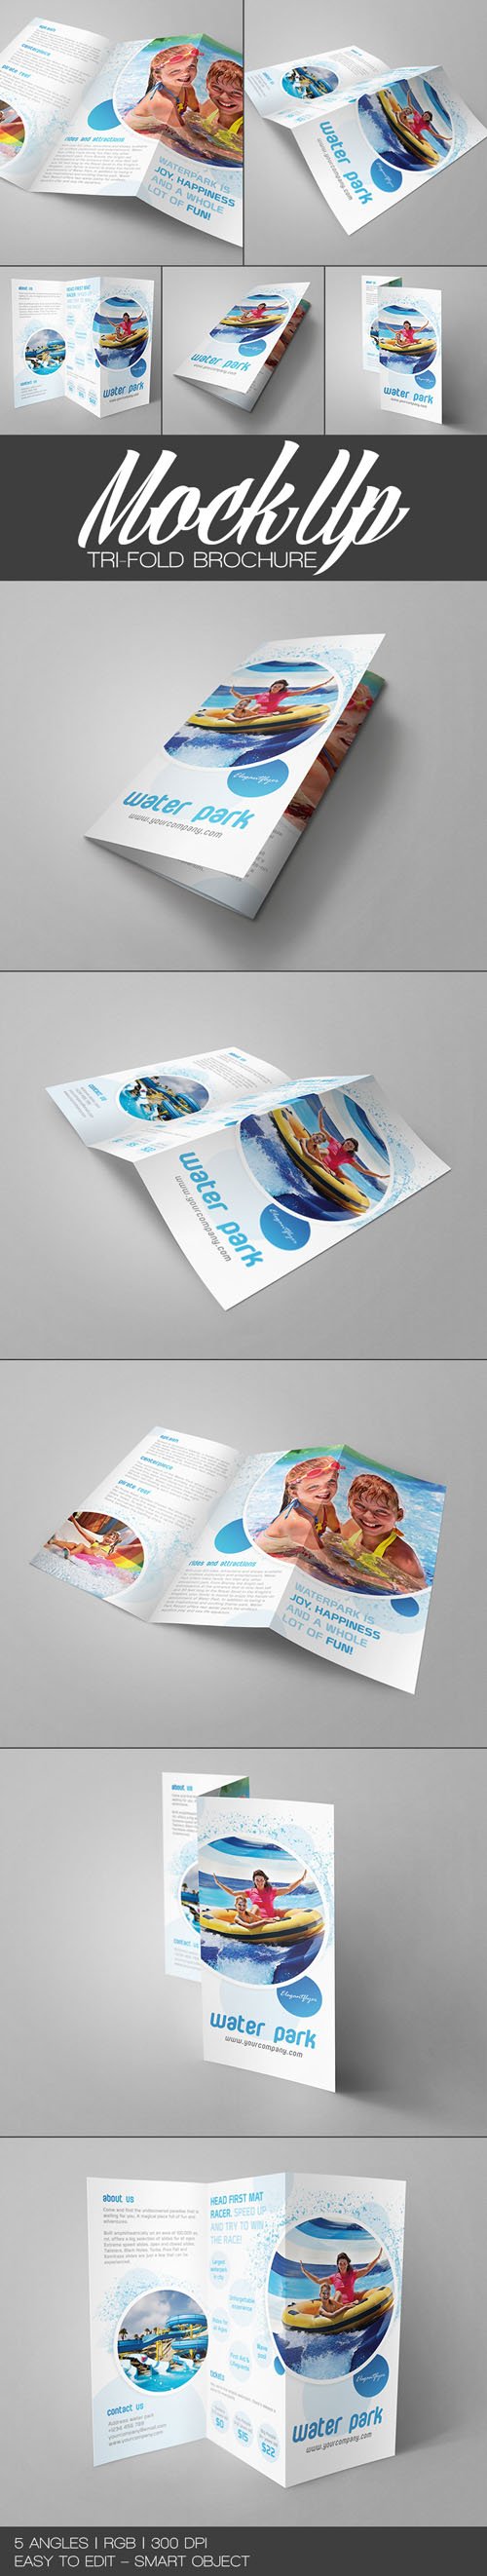 Water Park - 5 Tri-fold Brochure PSD MockUps